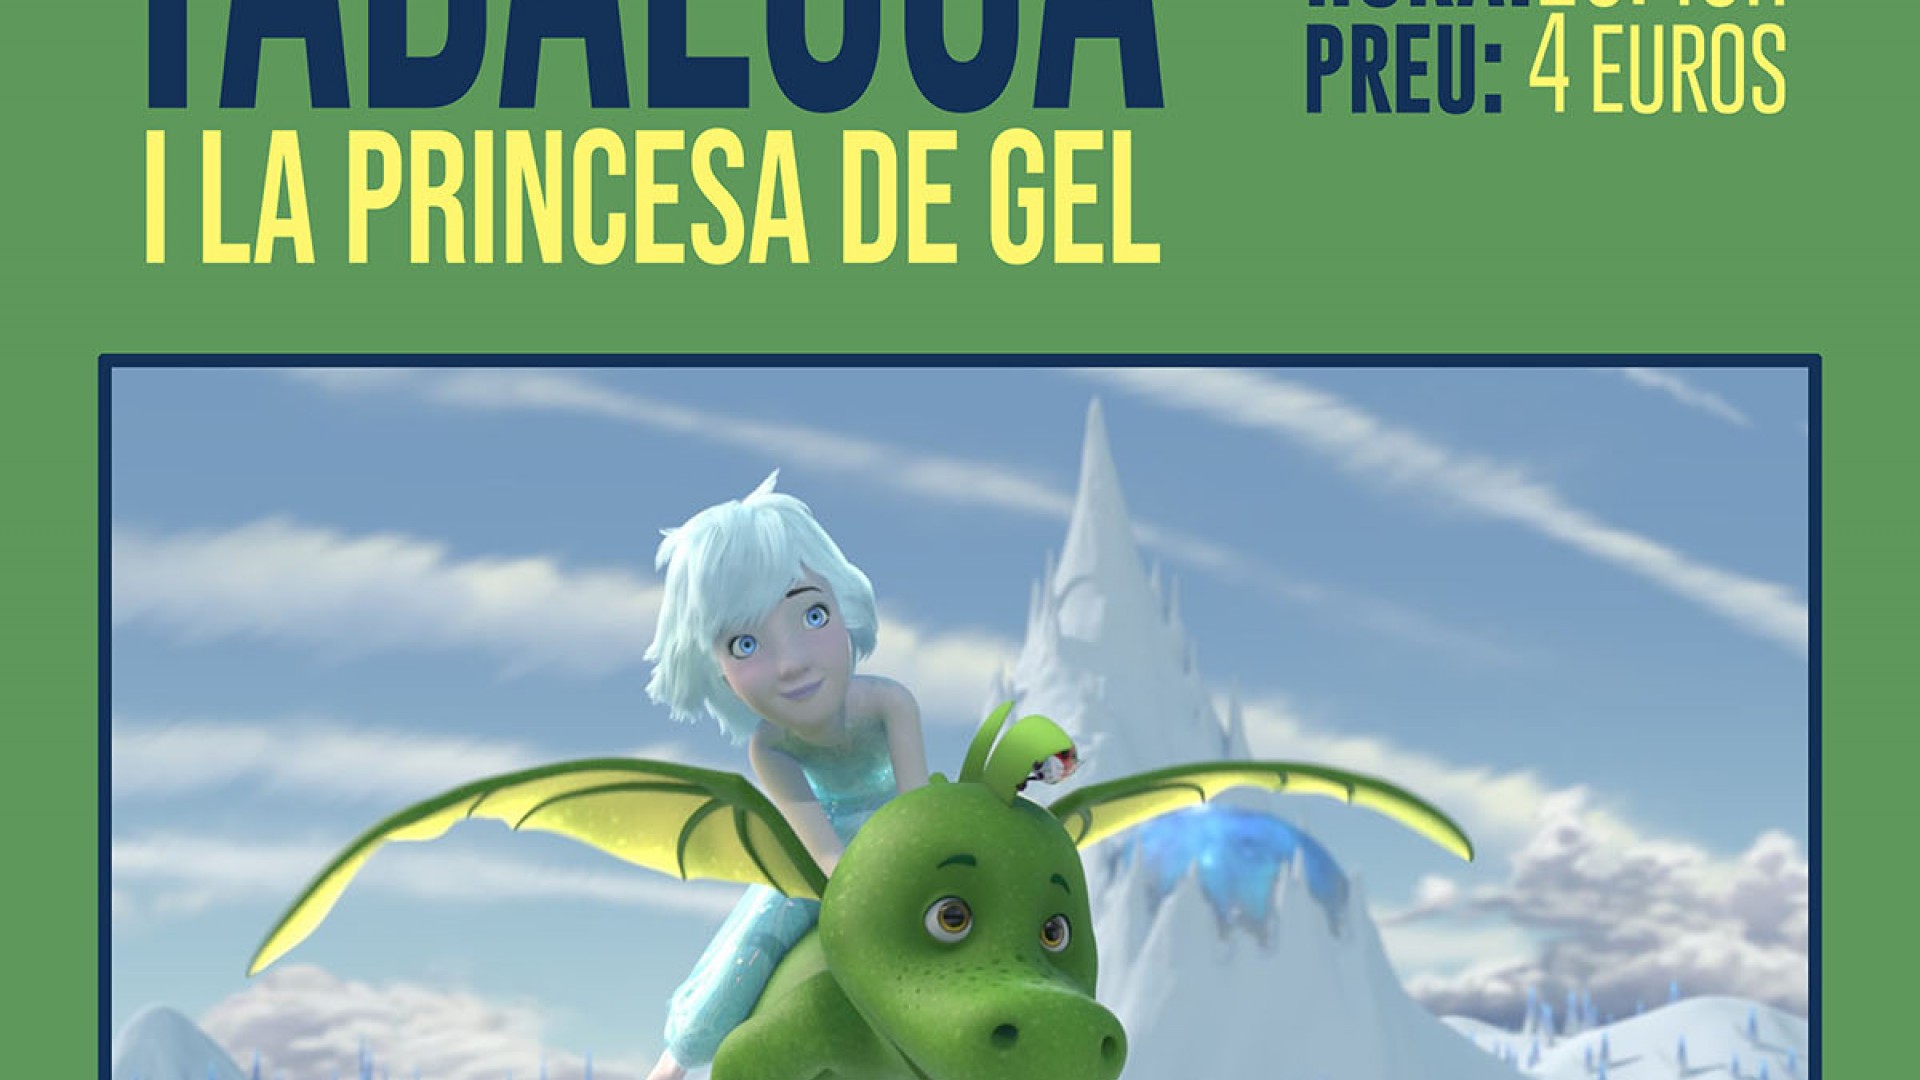 Torna CineCiutat Nins: Tabaluga i la princesa de gel